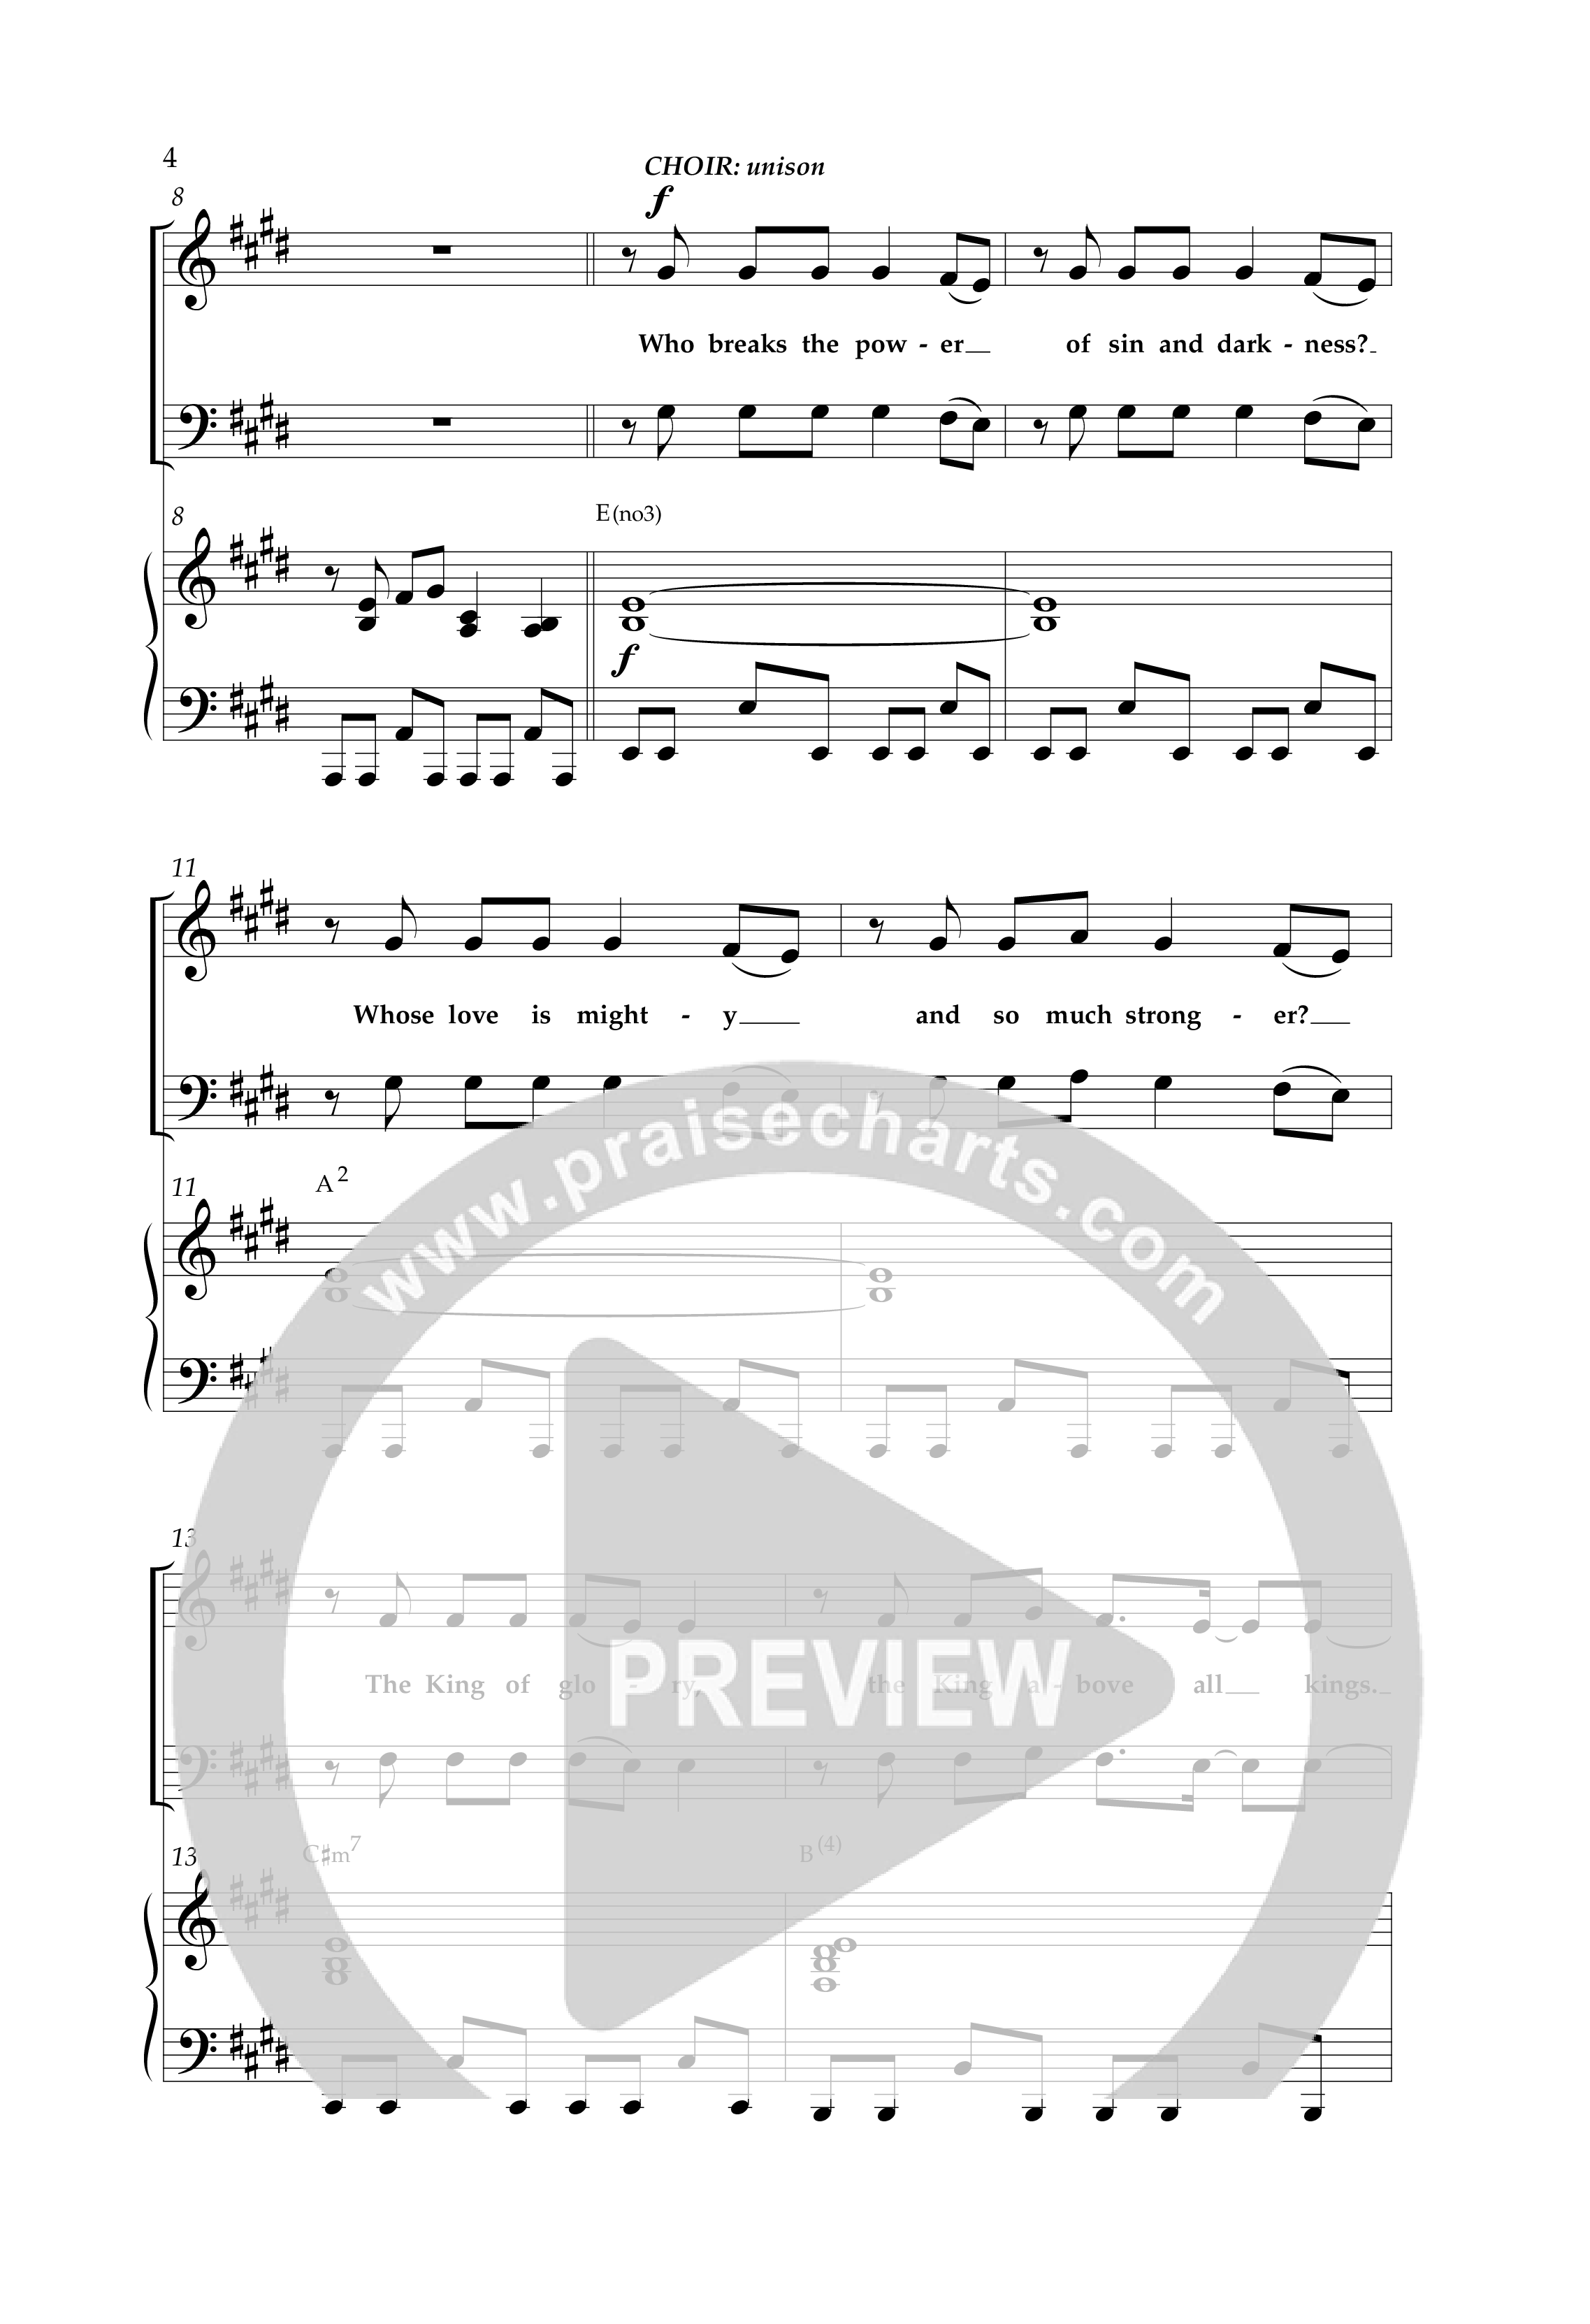 This Is Amazing Grace (Choral Anthem SATB) Anthem (SATB/Piano) (Lifeway Choral / Arr. Cliff Duren)